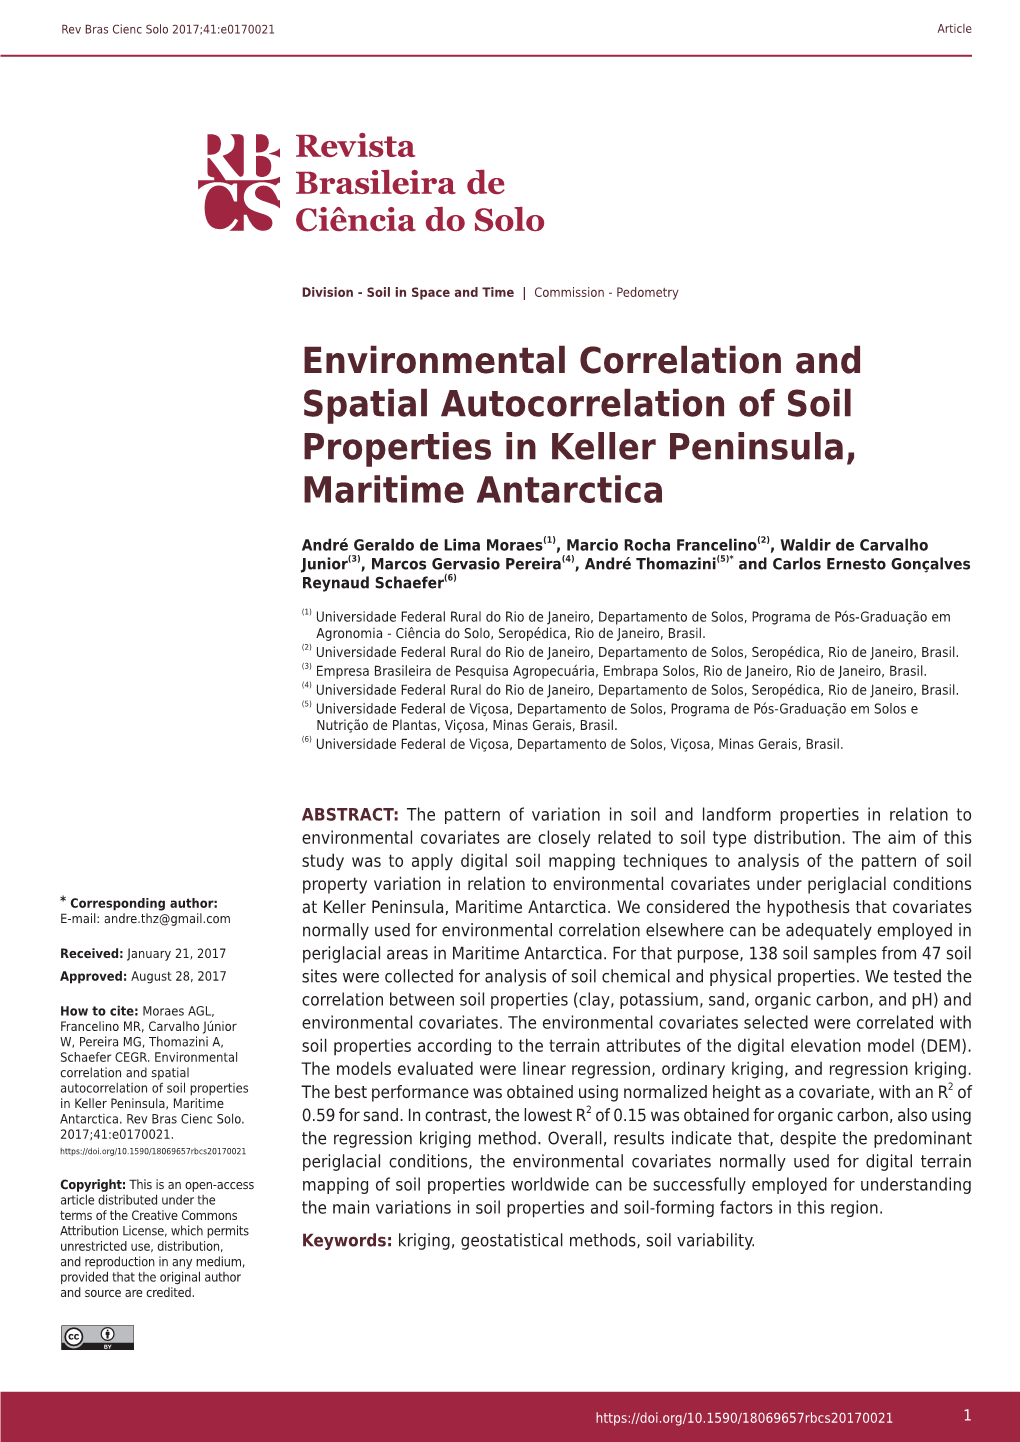 Environmental Correlation and Spatial Autocorrelation of Soil Properties in Keller Peninsula, Maritime Antarctica